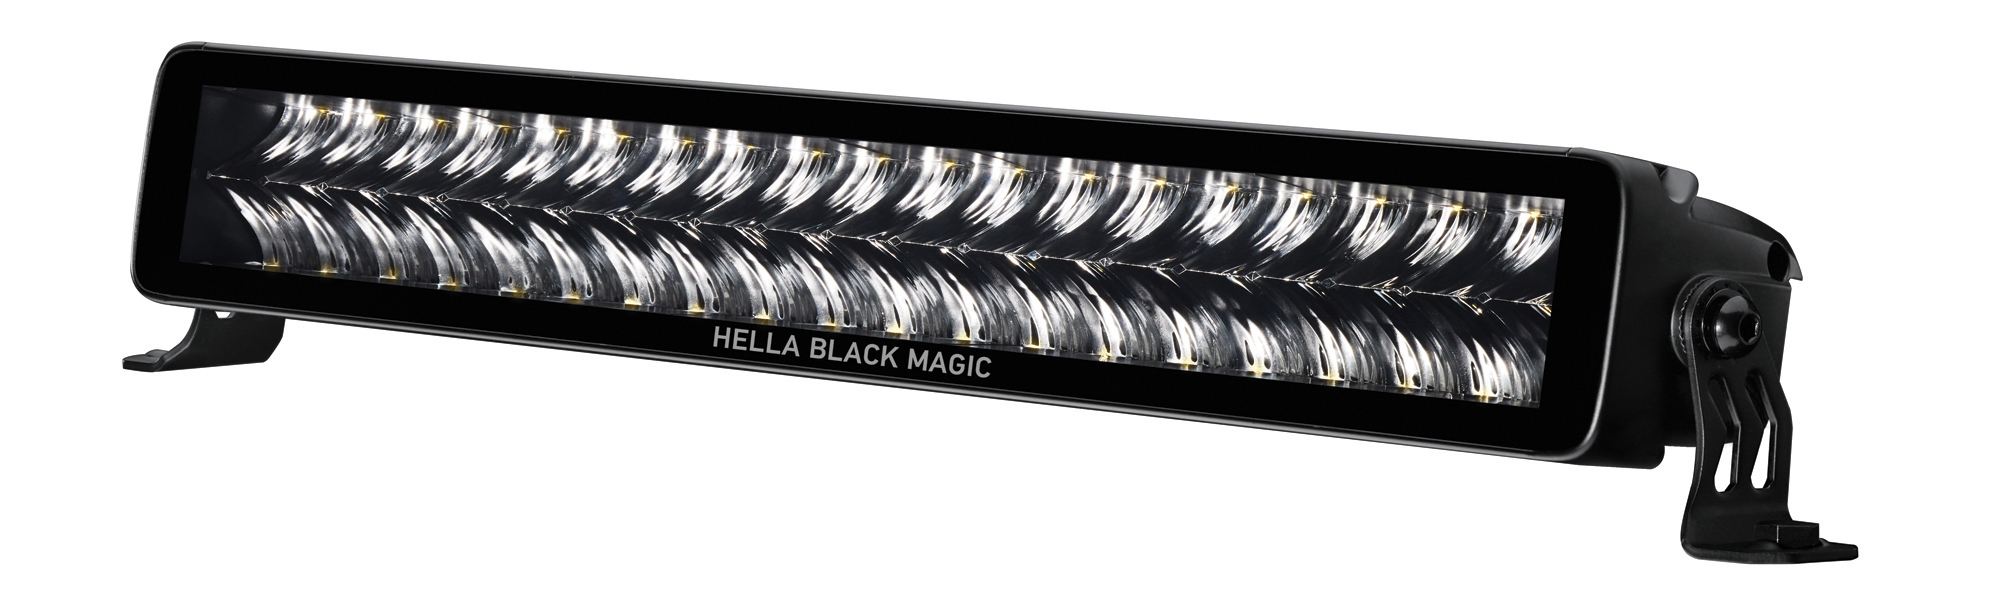 Black Magic LED Lightbars Black Magic LED 21.5 Double Lightbar